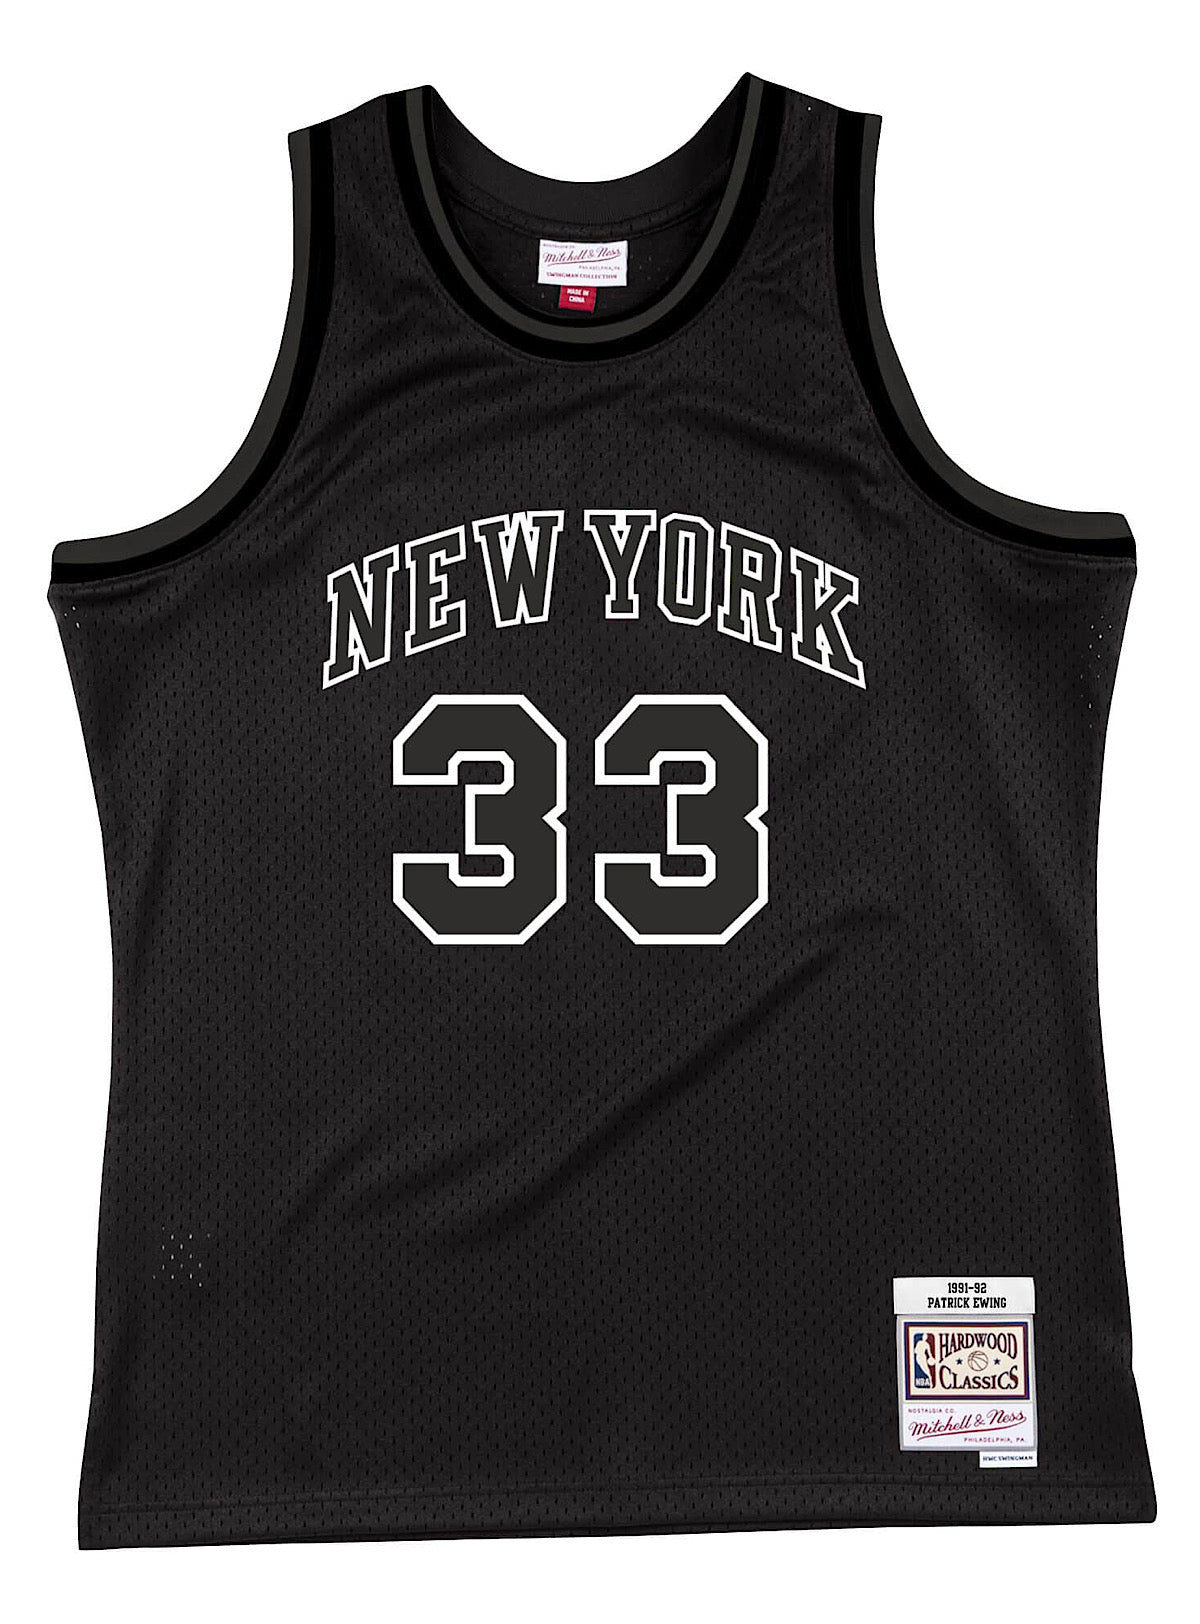 Mitchell & Ness Jersey - Knicks 1991 John Starks - Camo Reflective -  TFSM1115